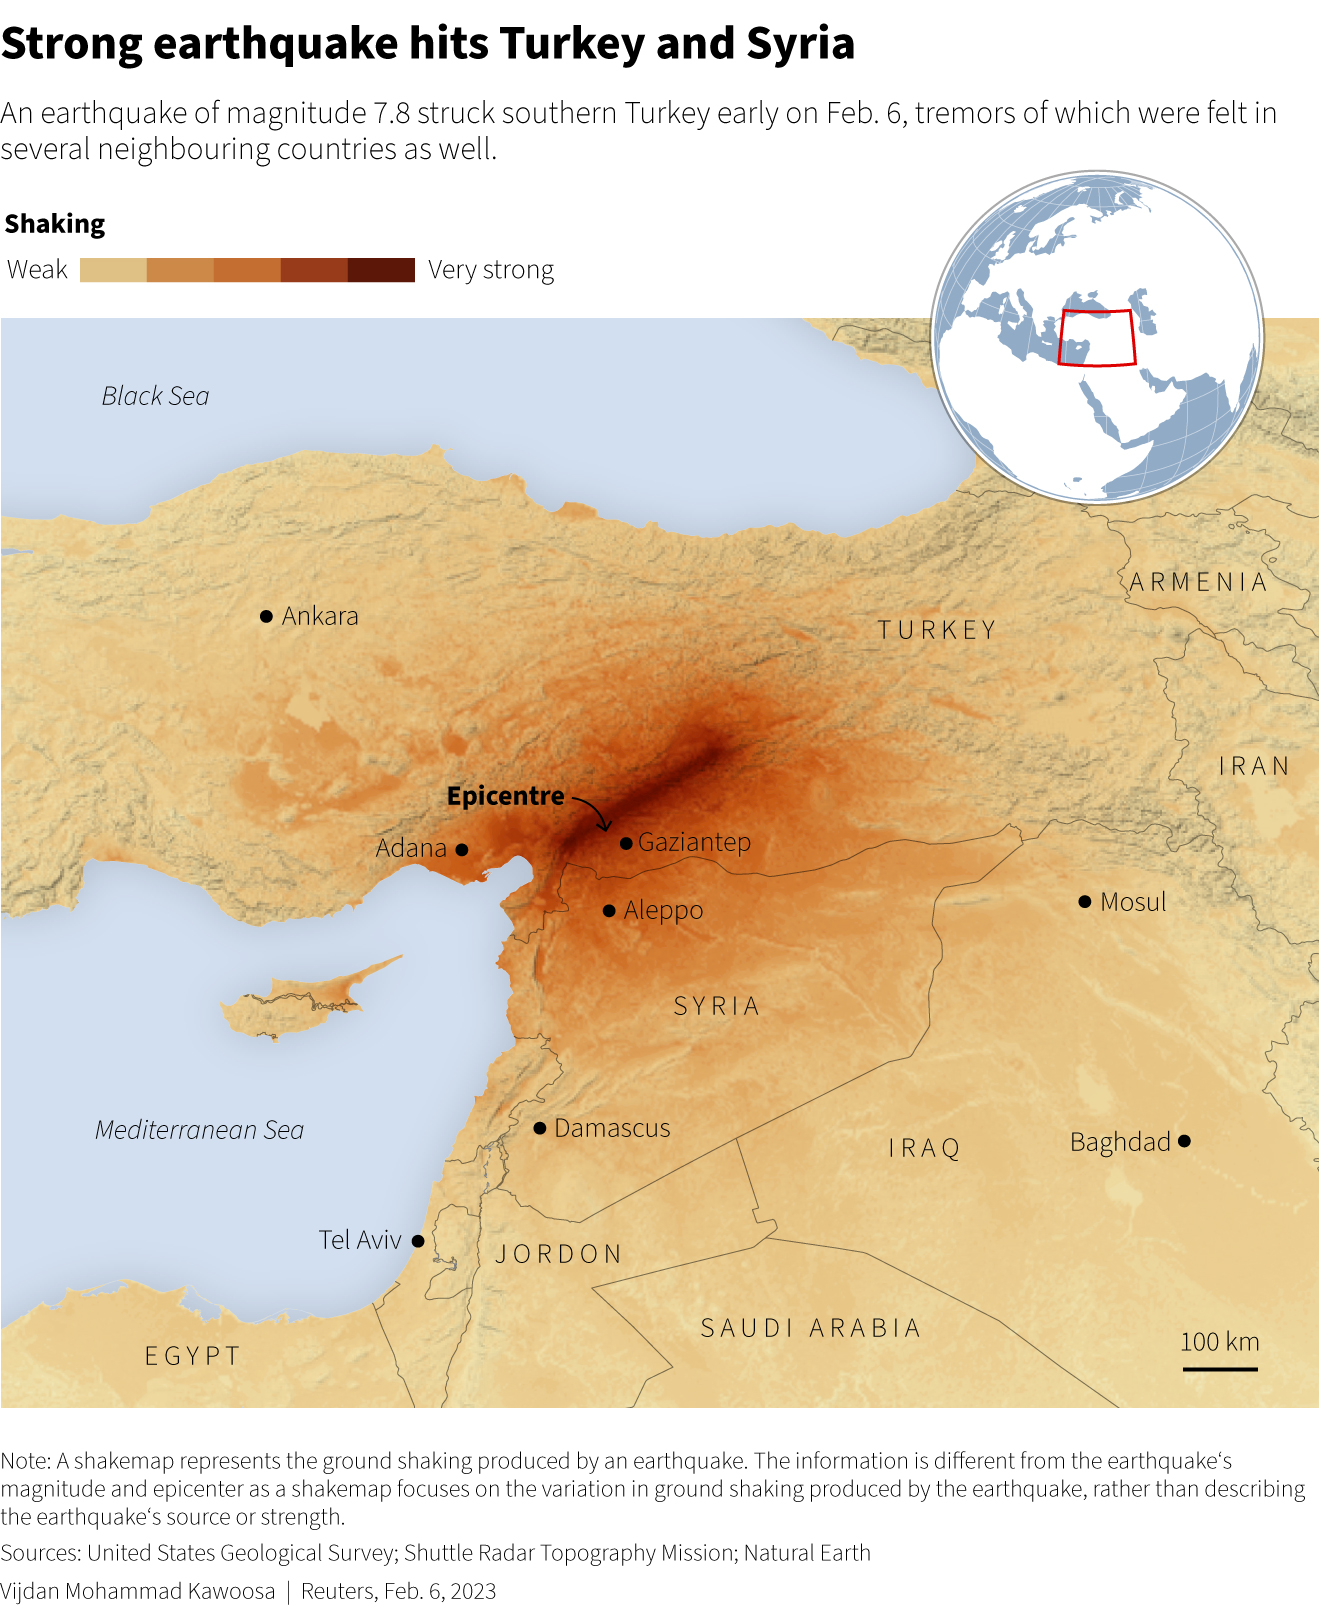 Huge 7.8 earthquake rocks Turkey and Syria, kills 2400, felt in Lebanon, updates